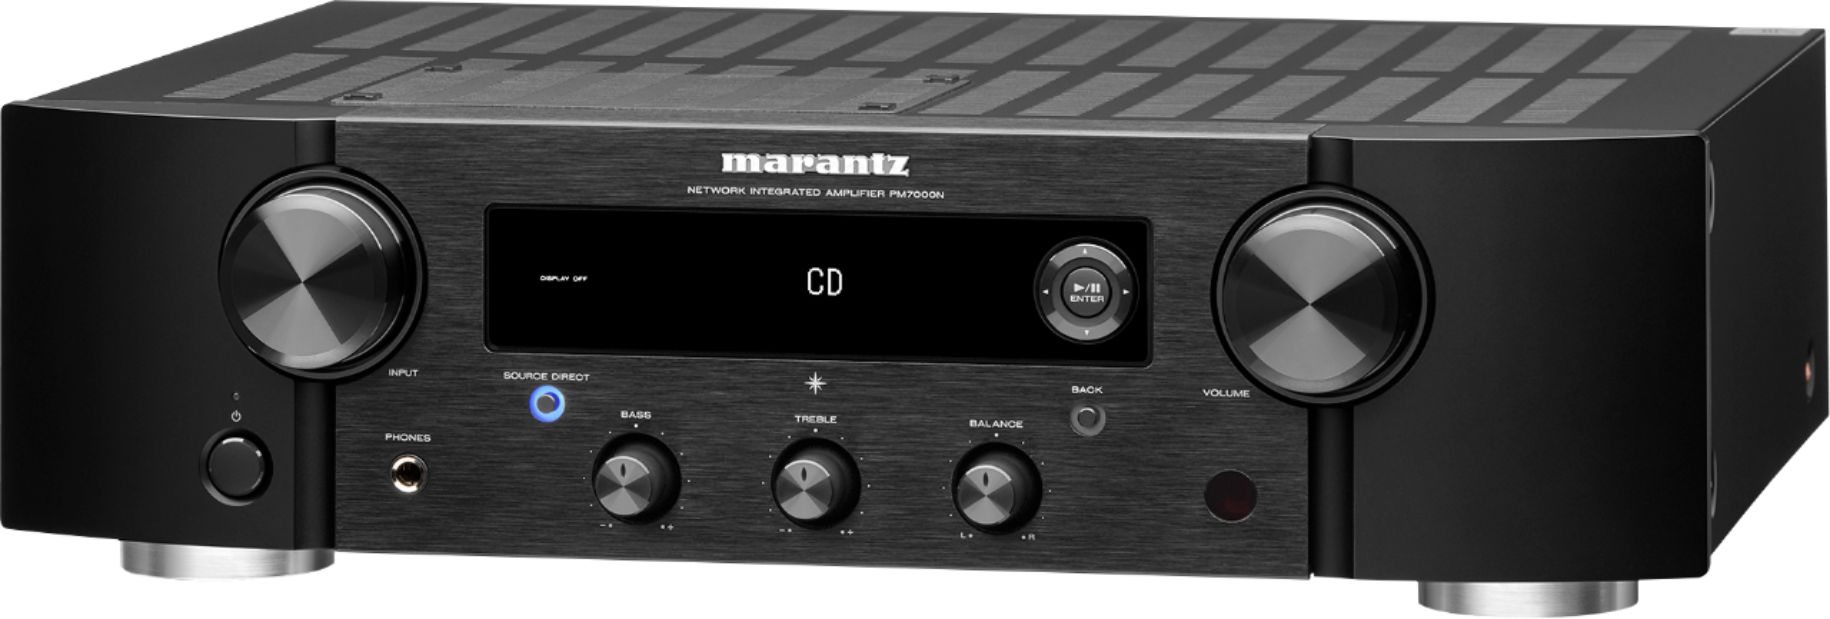 Marantz PM7000N Integrated Hi-Fi Amplifier HEOS Built-in Amazon